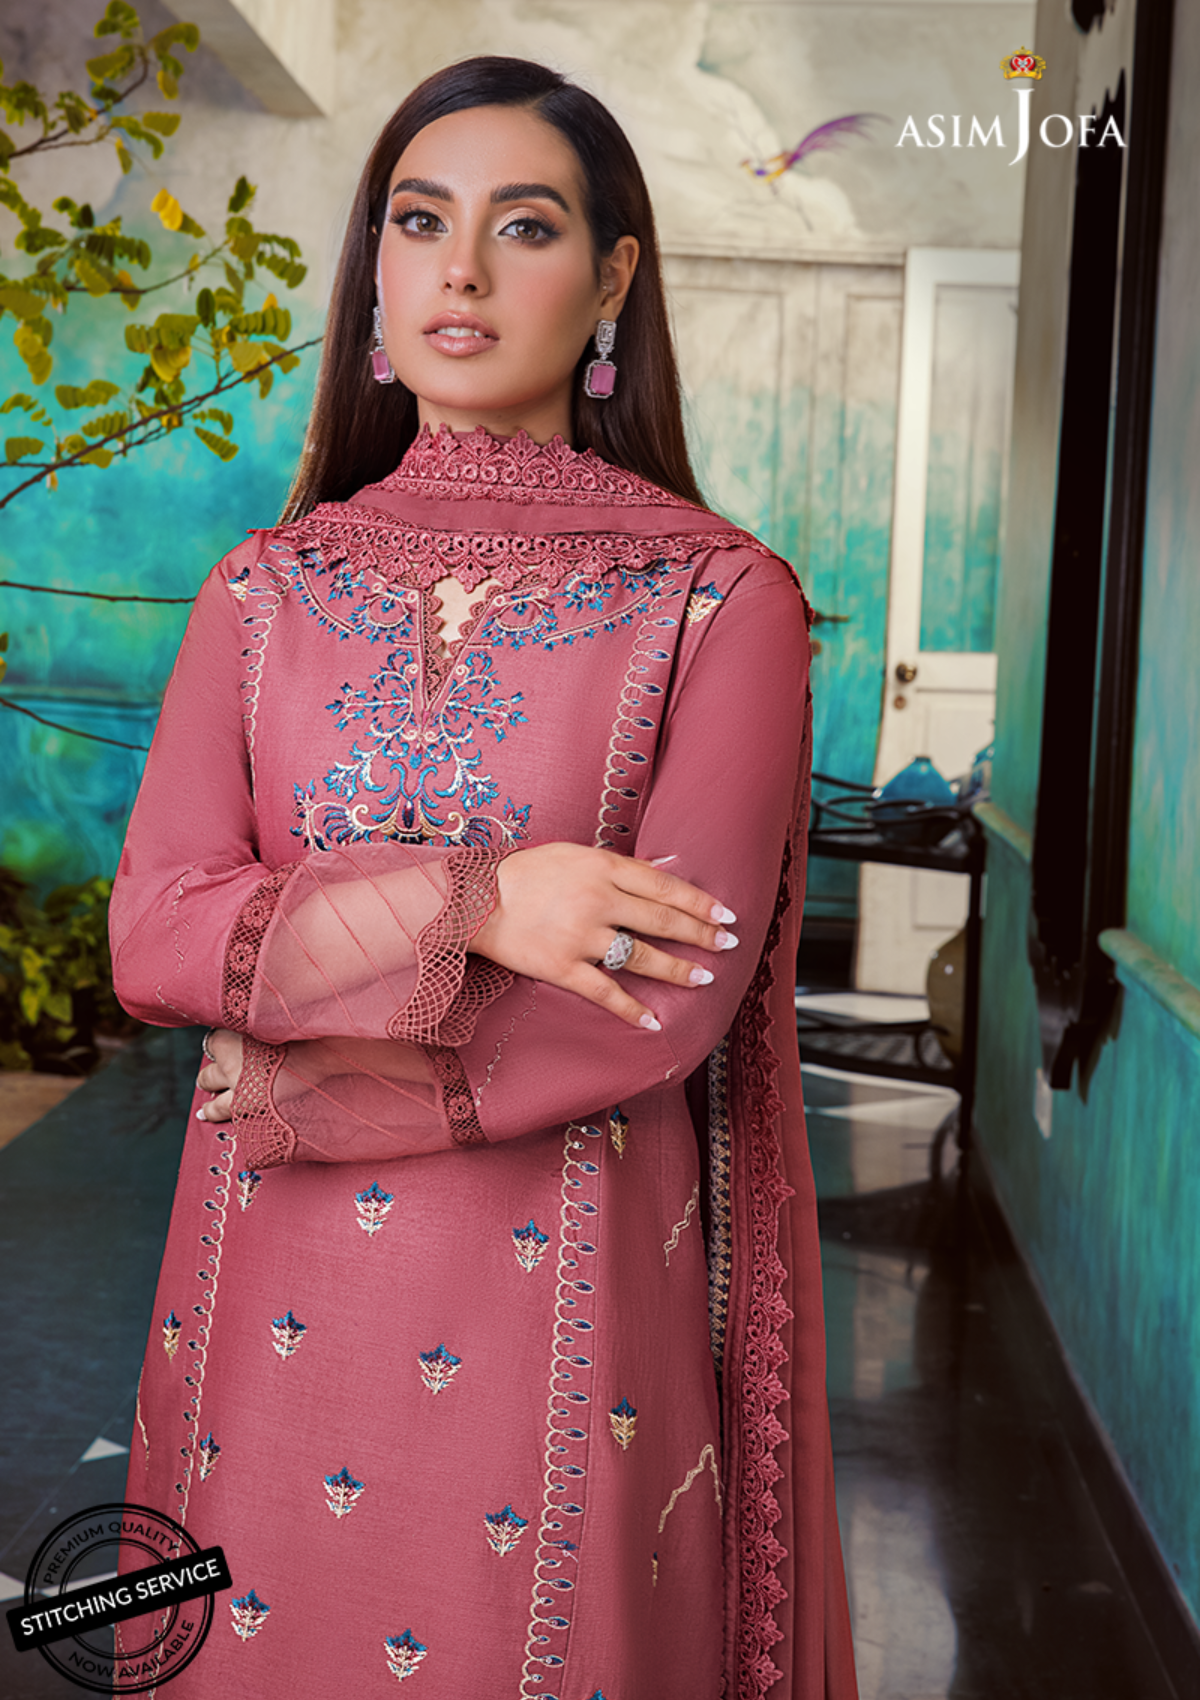 Winter Collection - Asim Jofa - Iqra & Minal - AJIM#23 available at Saleem Fabrics Traditions